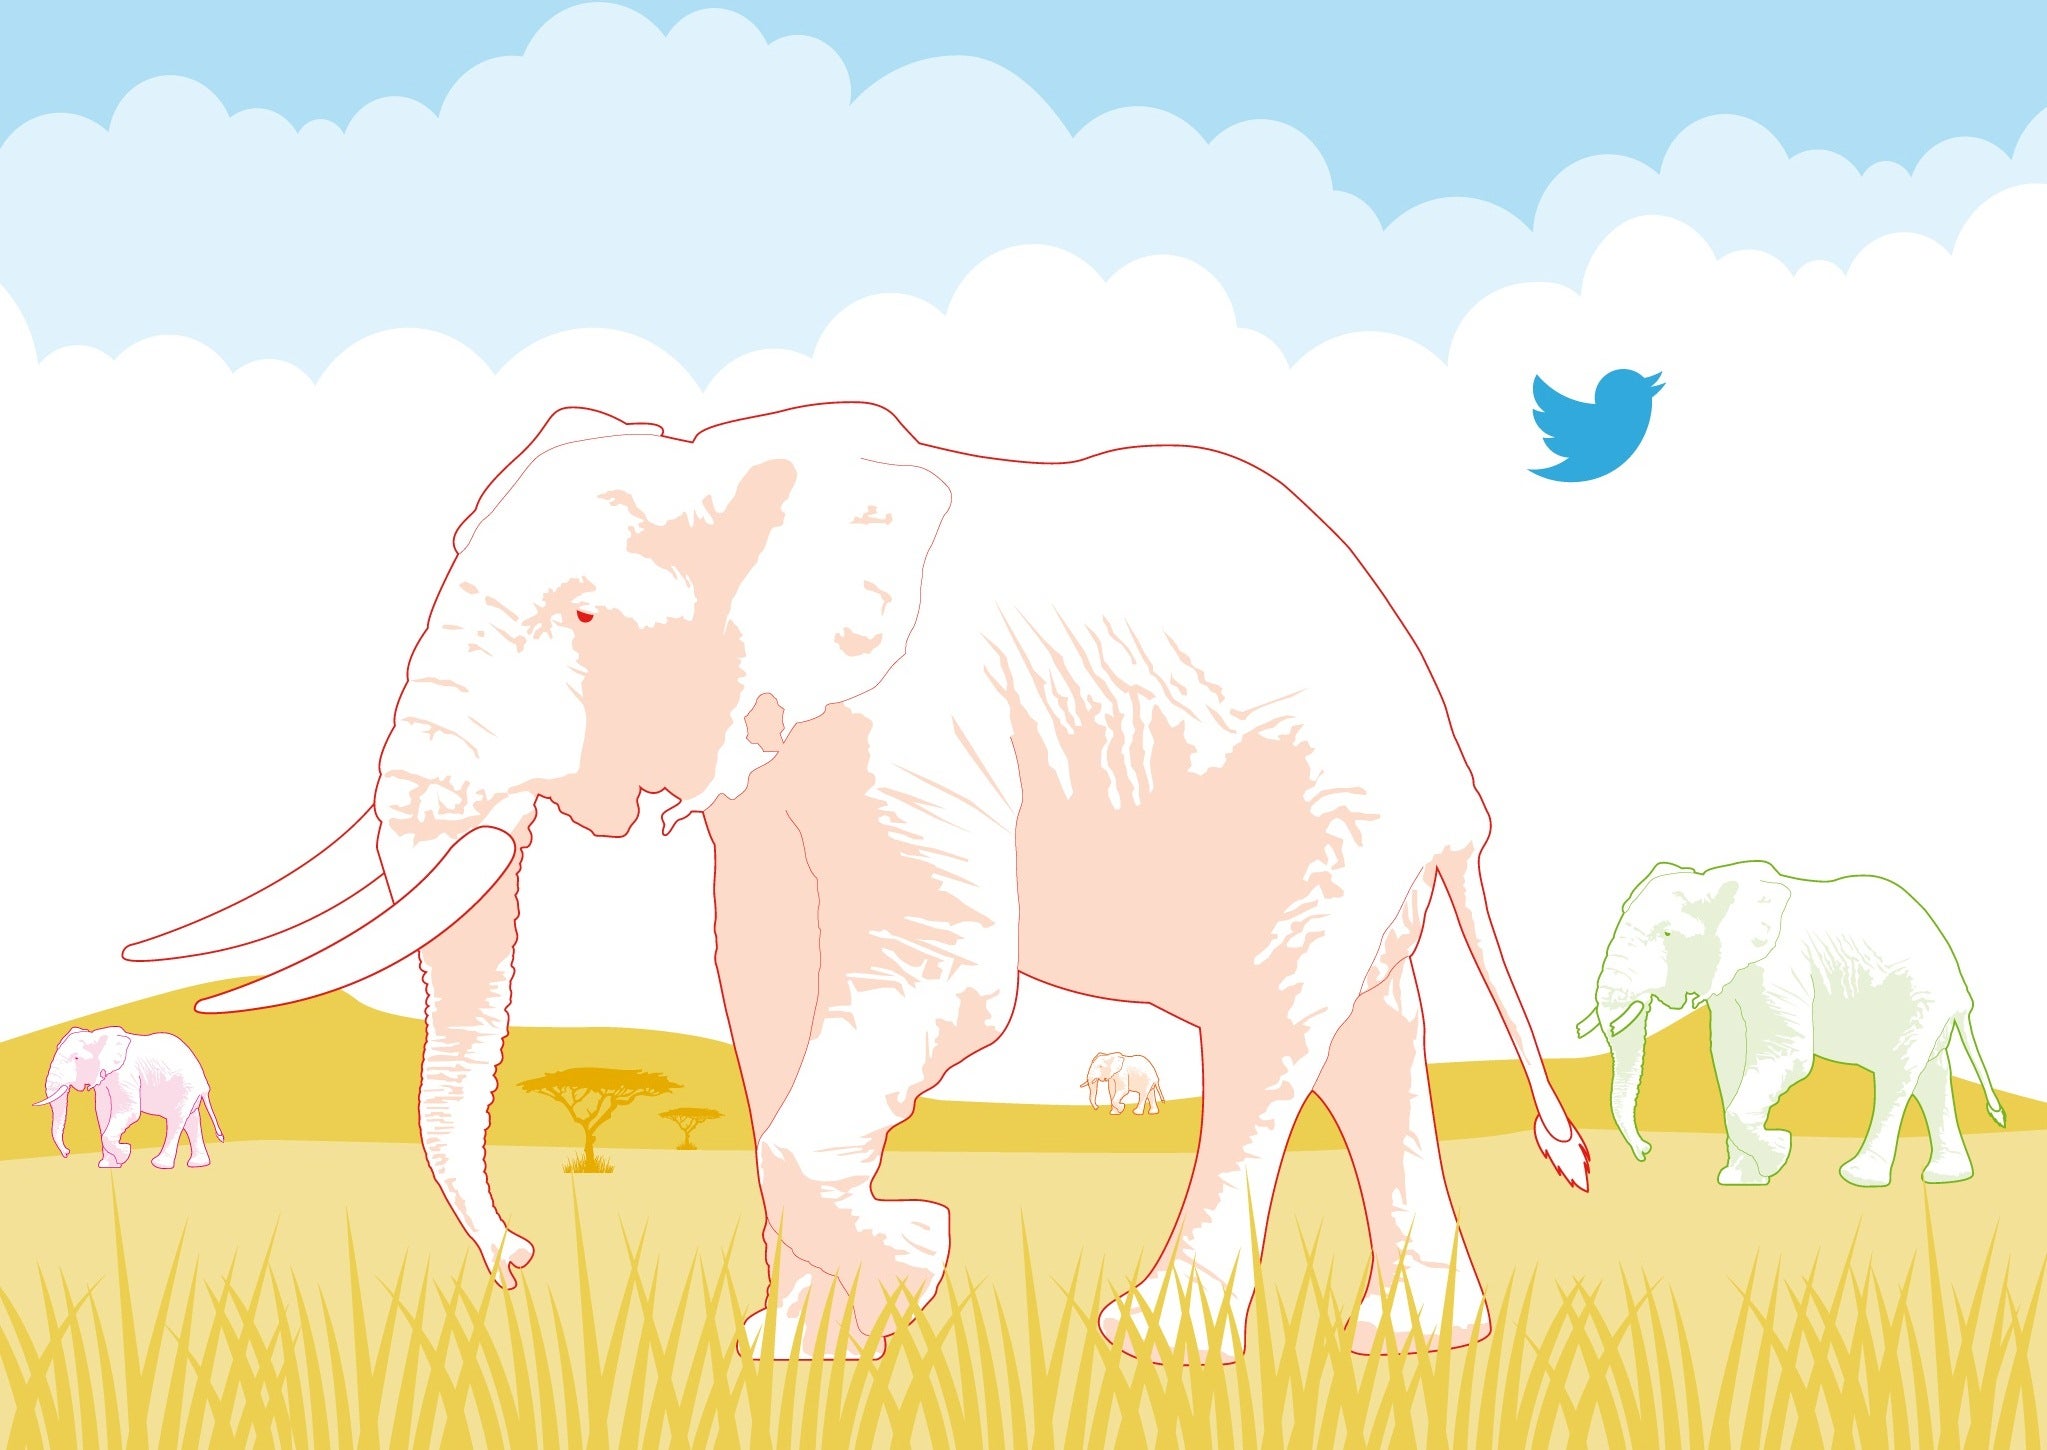 You can follow four elephants at #elephantslive